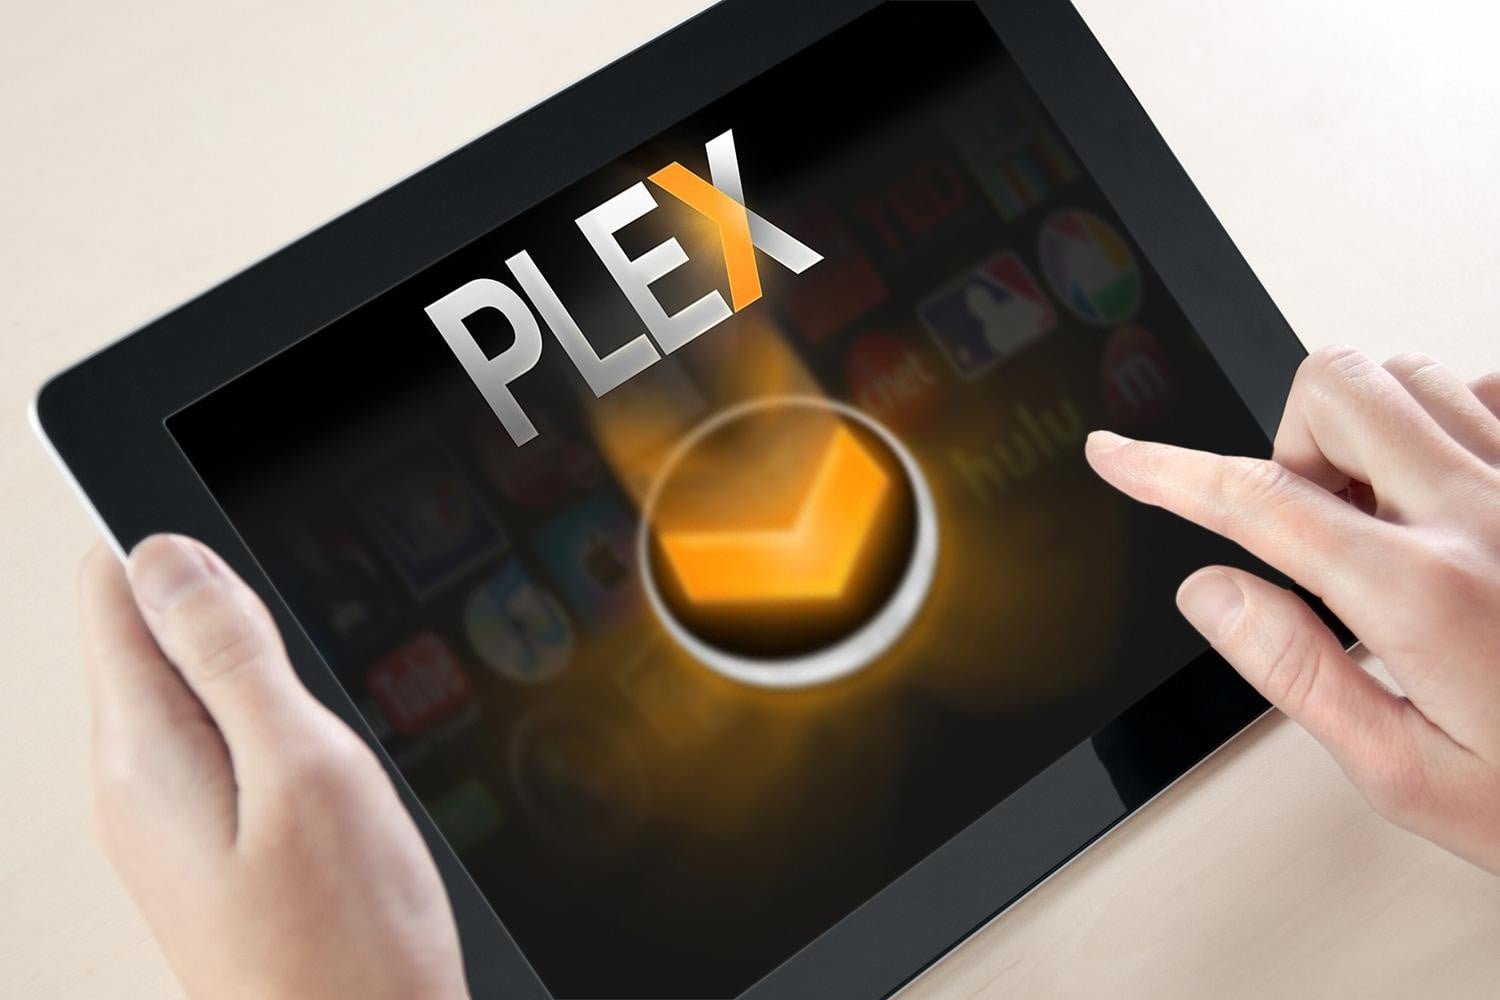 plex app